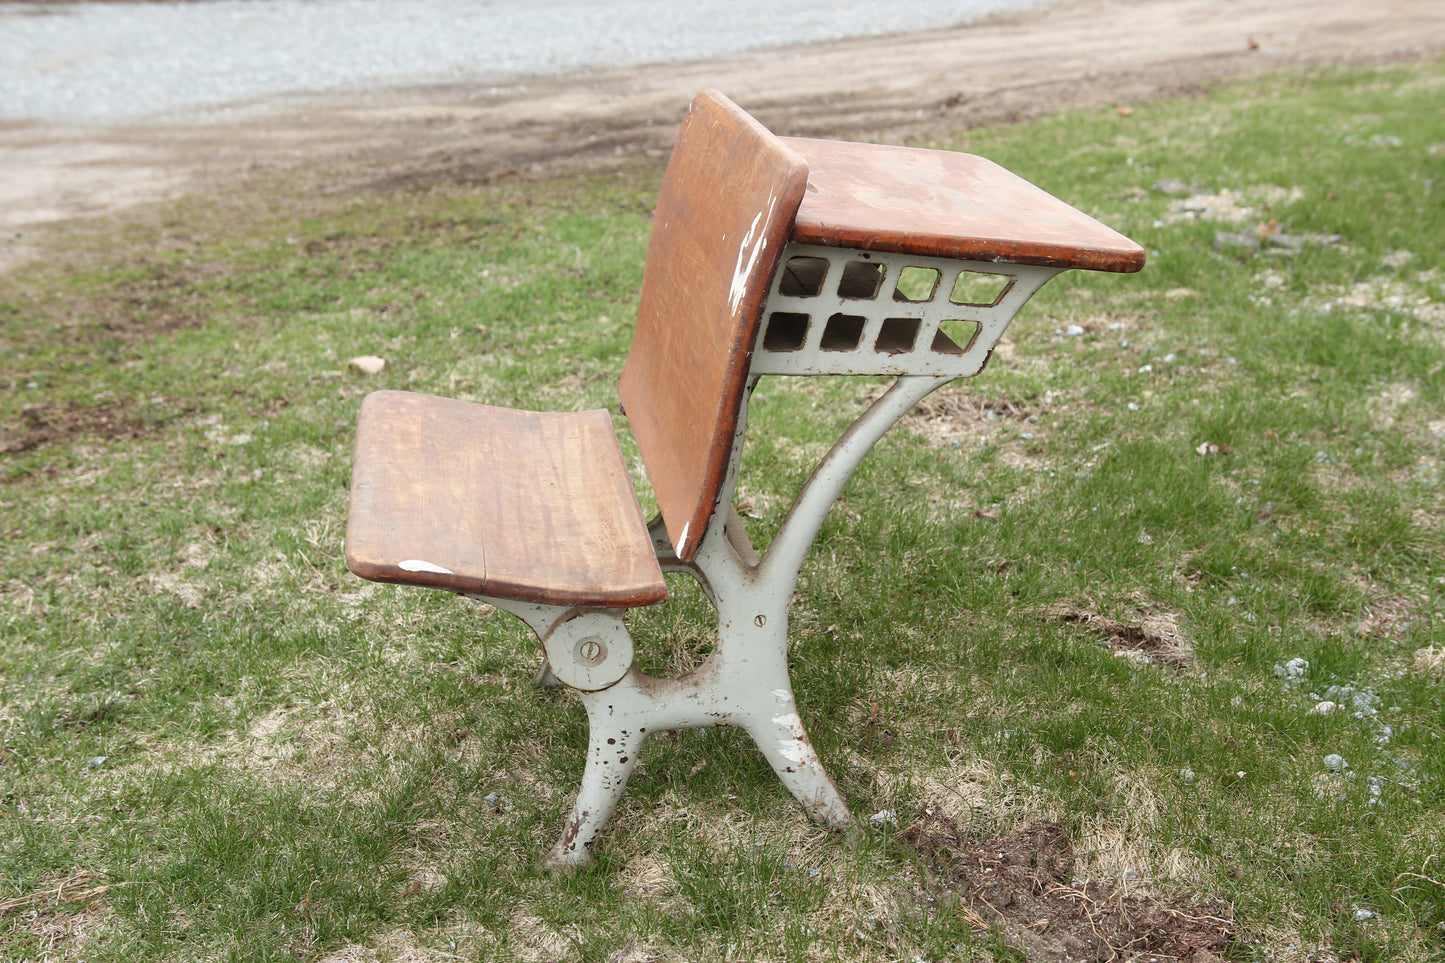 Antique Folding Cast Iron and Wood Child's Size School Desk #1